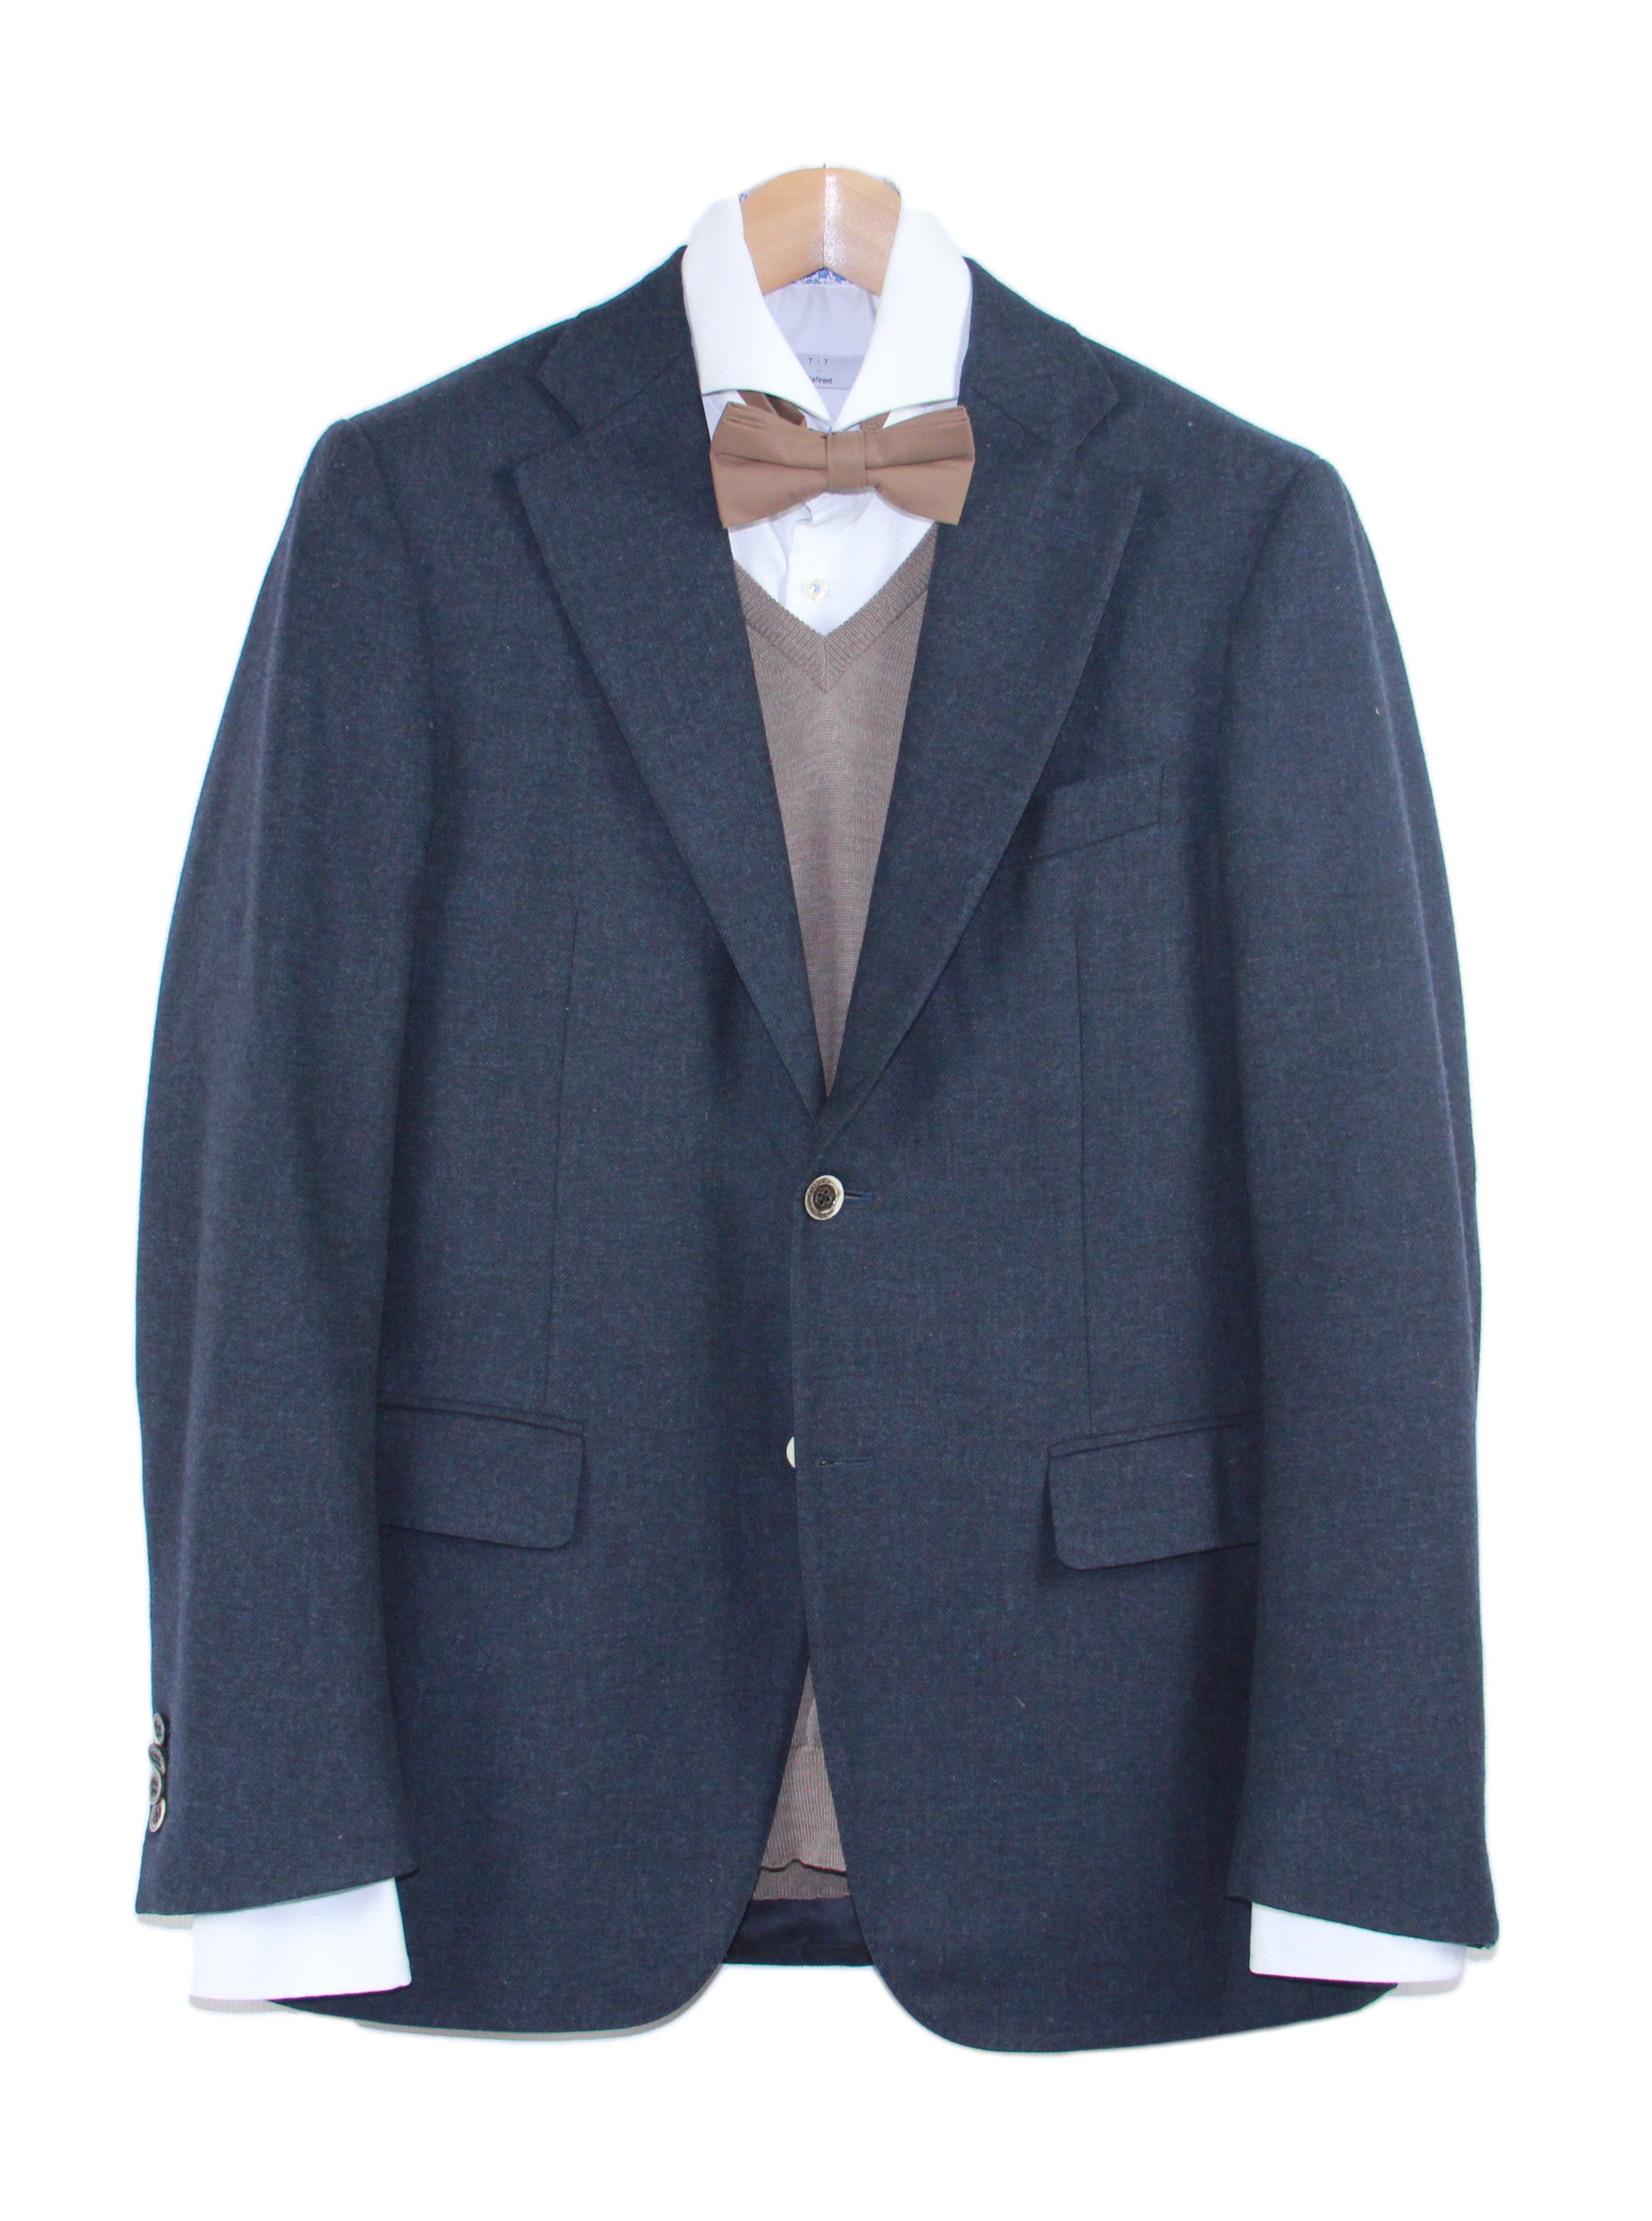 CANALI Cashmere Wool Dark Blue Blazer, SIZE US 40R, EU 50R